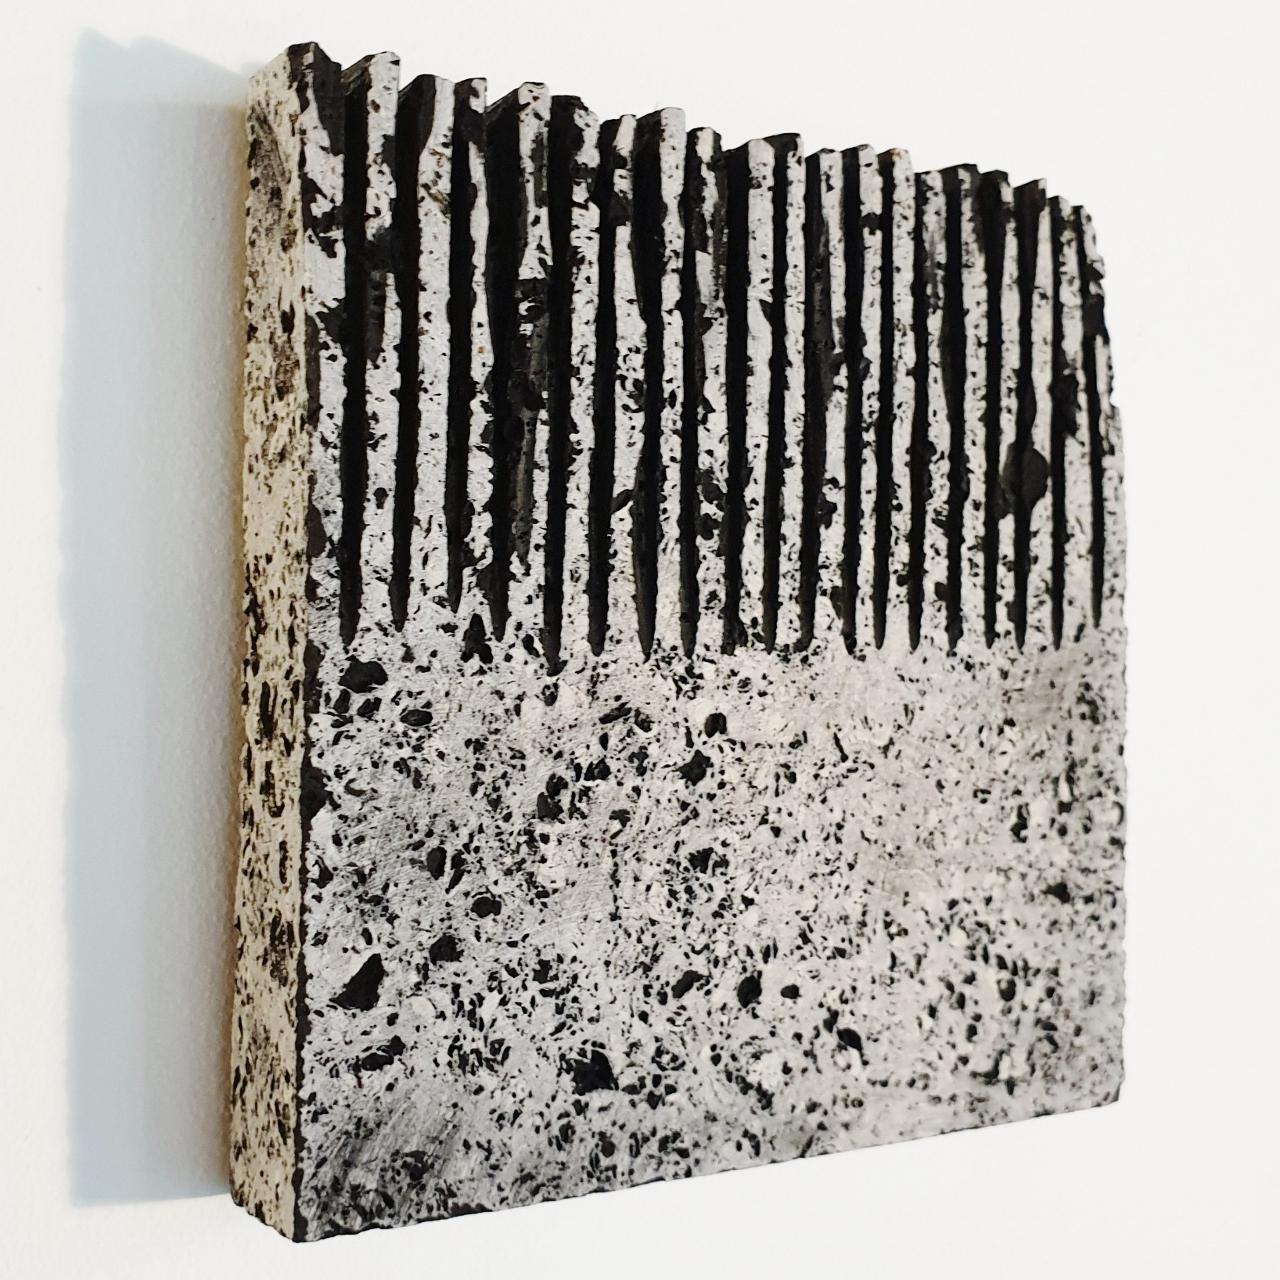 o.T. (Bk15Hf) - grey black contemporary modern wall sculpture painting relief - Contemporary Sculpture by Dieter Kränzlein